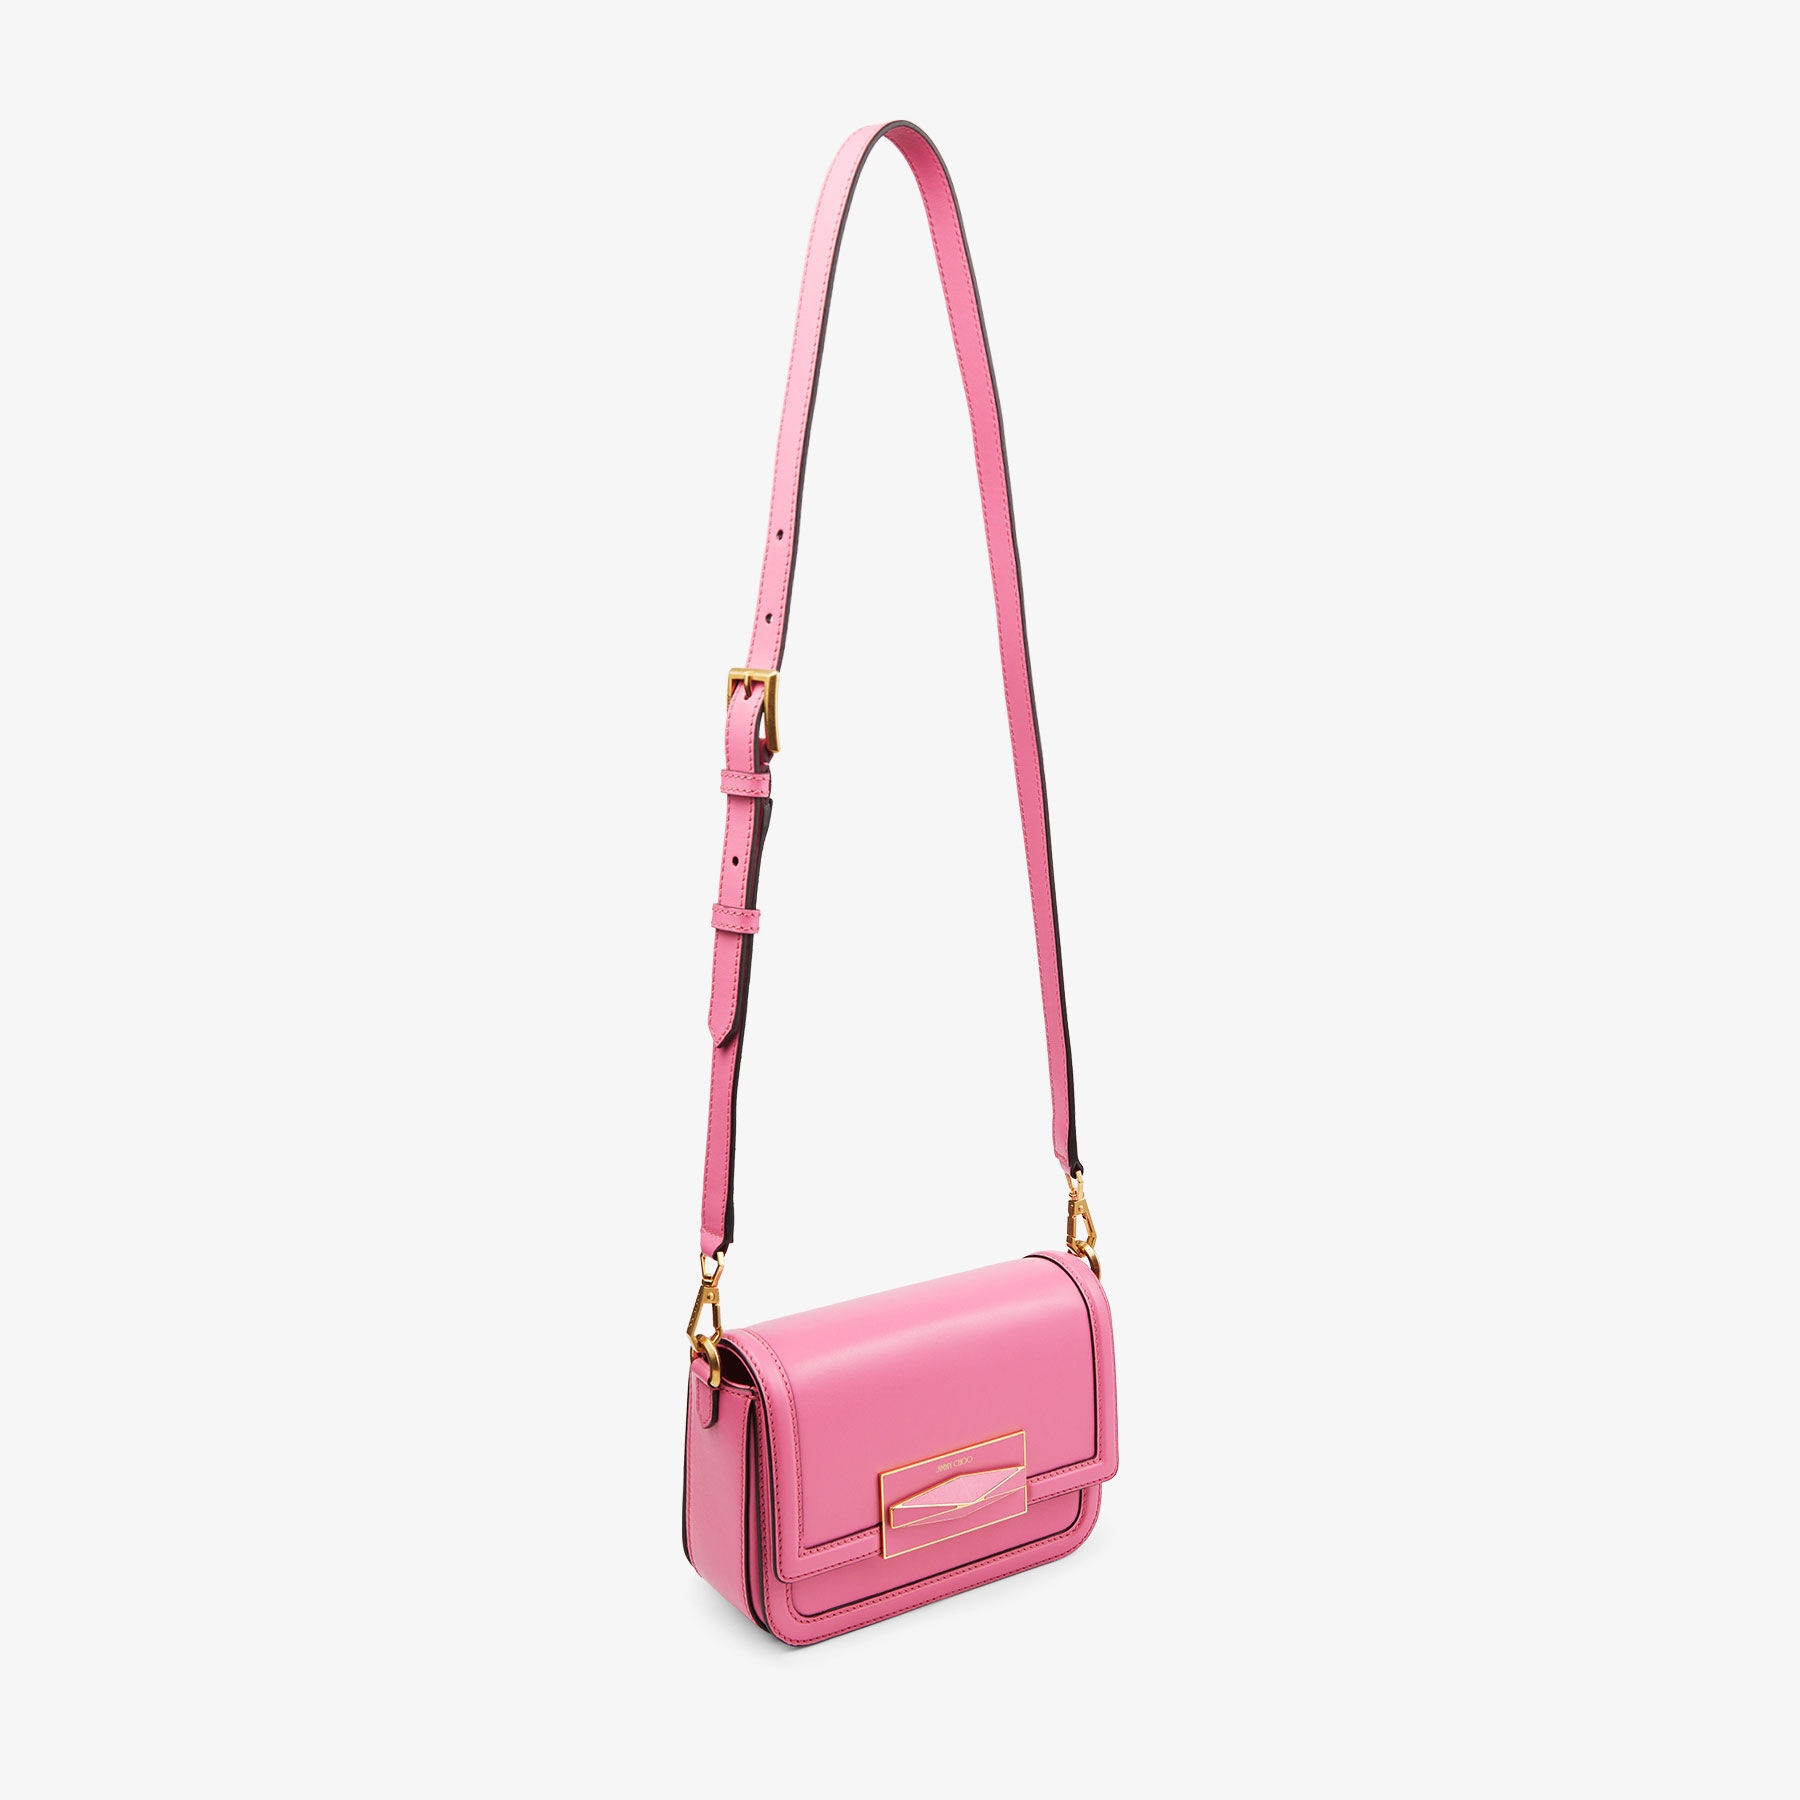 Diamond Crossbody
Candy Pink Smooth Calf Leather Top Handle Bag - 5